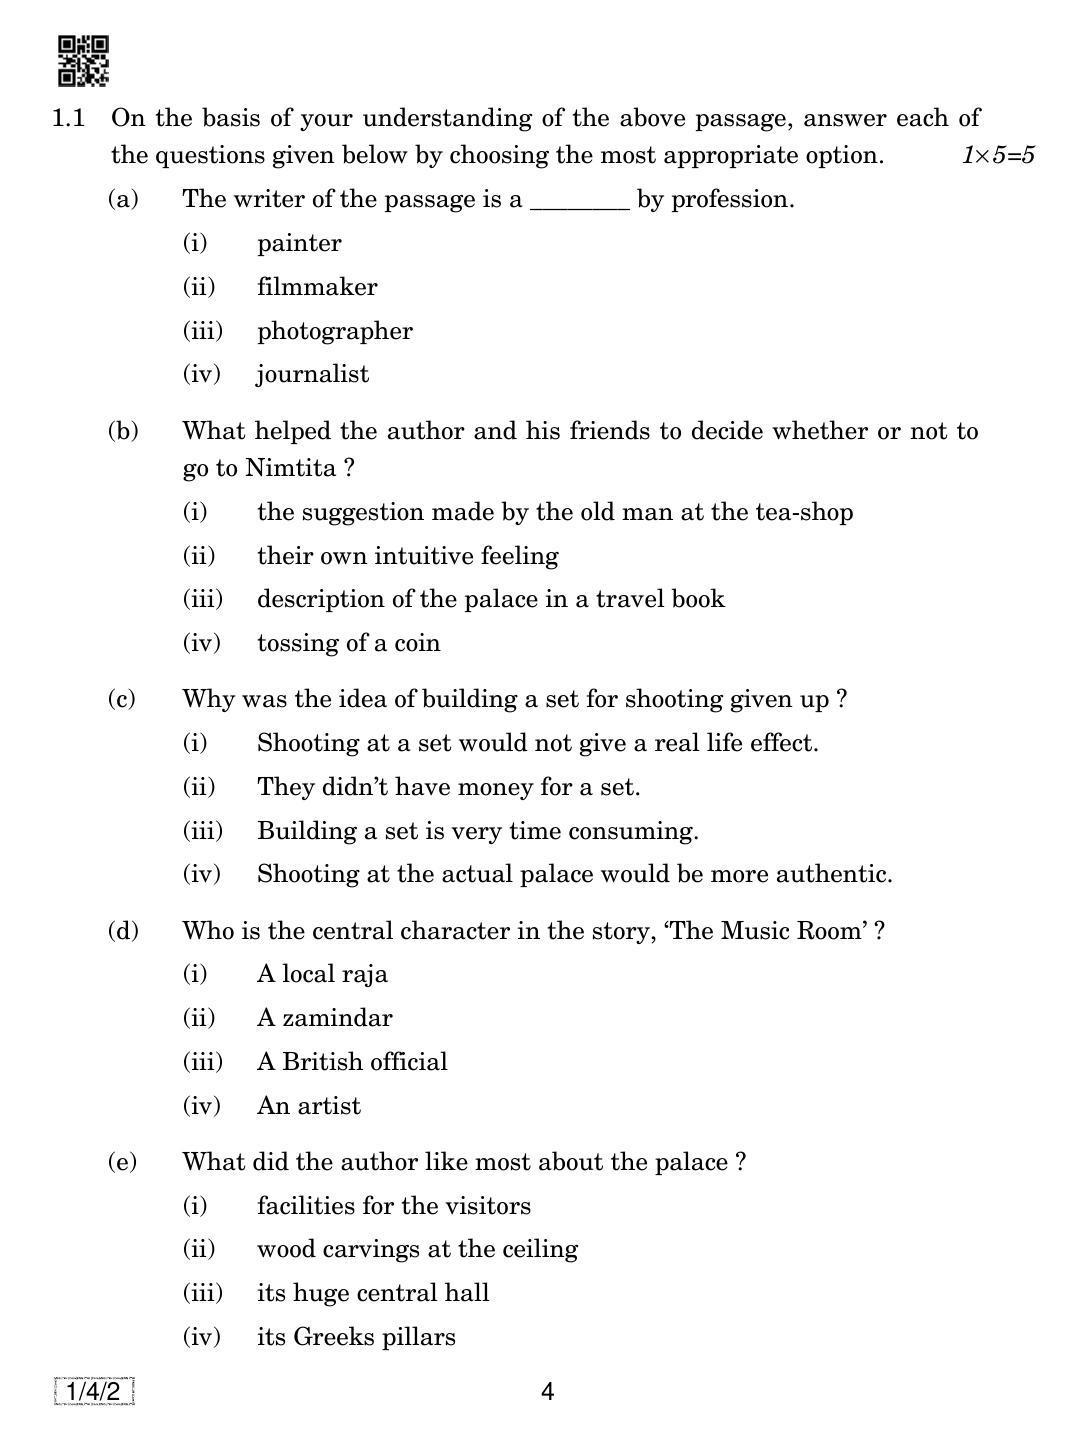 CBSE Class 12 1-4-2 English Core 2019 Question Paper - Page 4